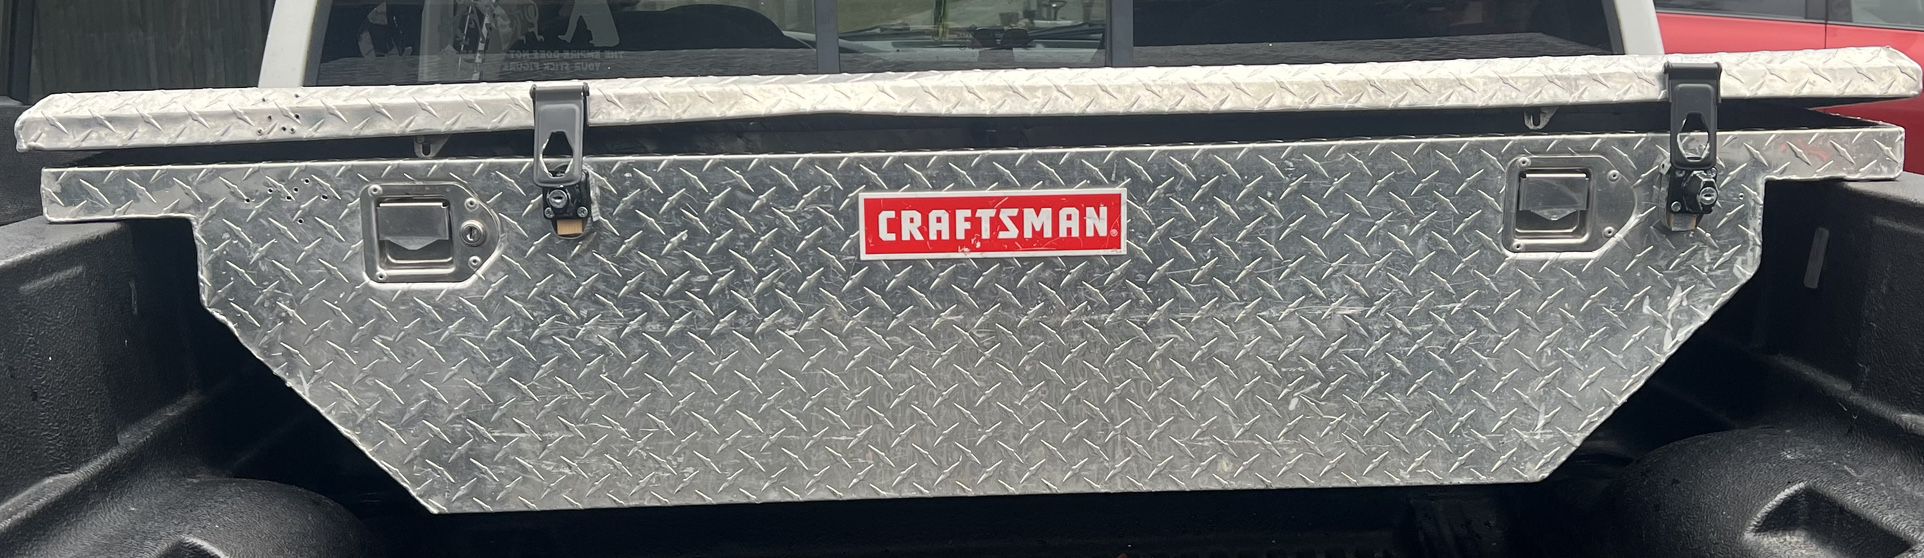 Craftsman Truck Bed Tool Box 